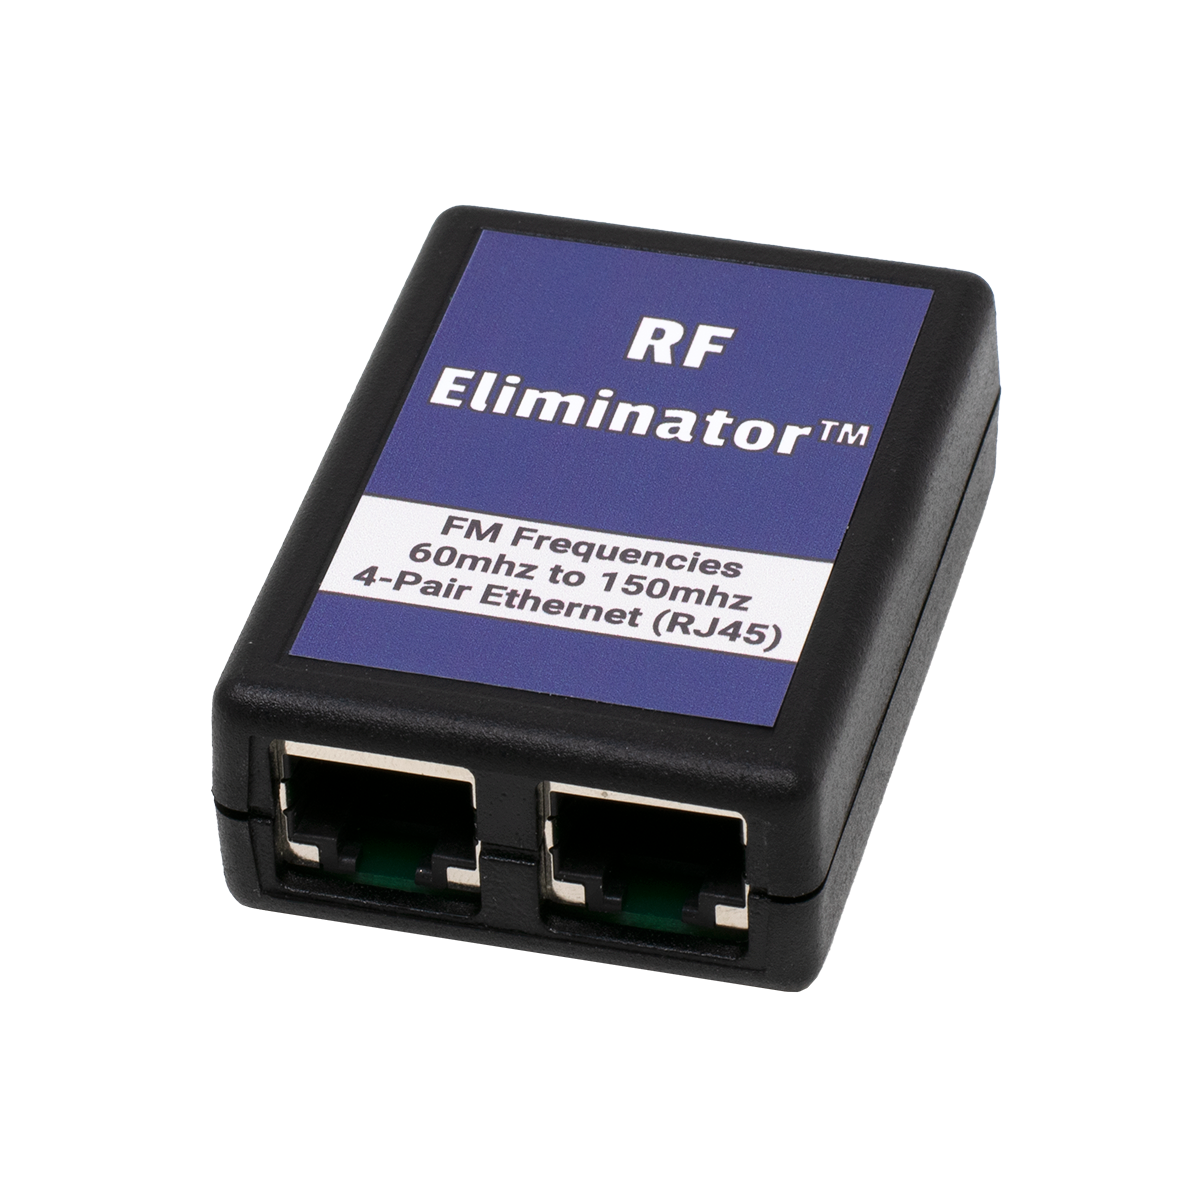 RF Eliminator - 4 Pair Ethernet - FM (Side View)